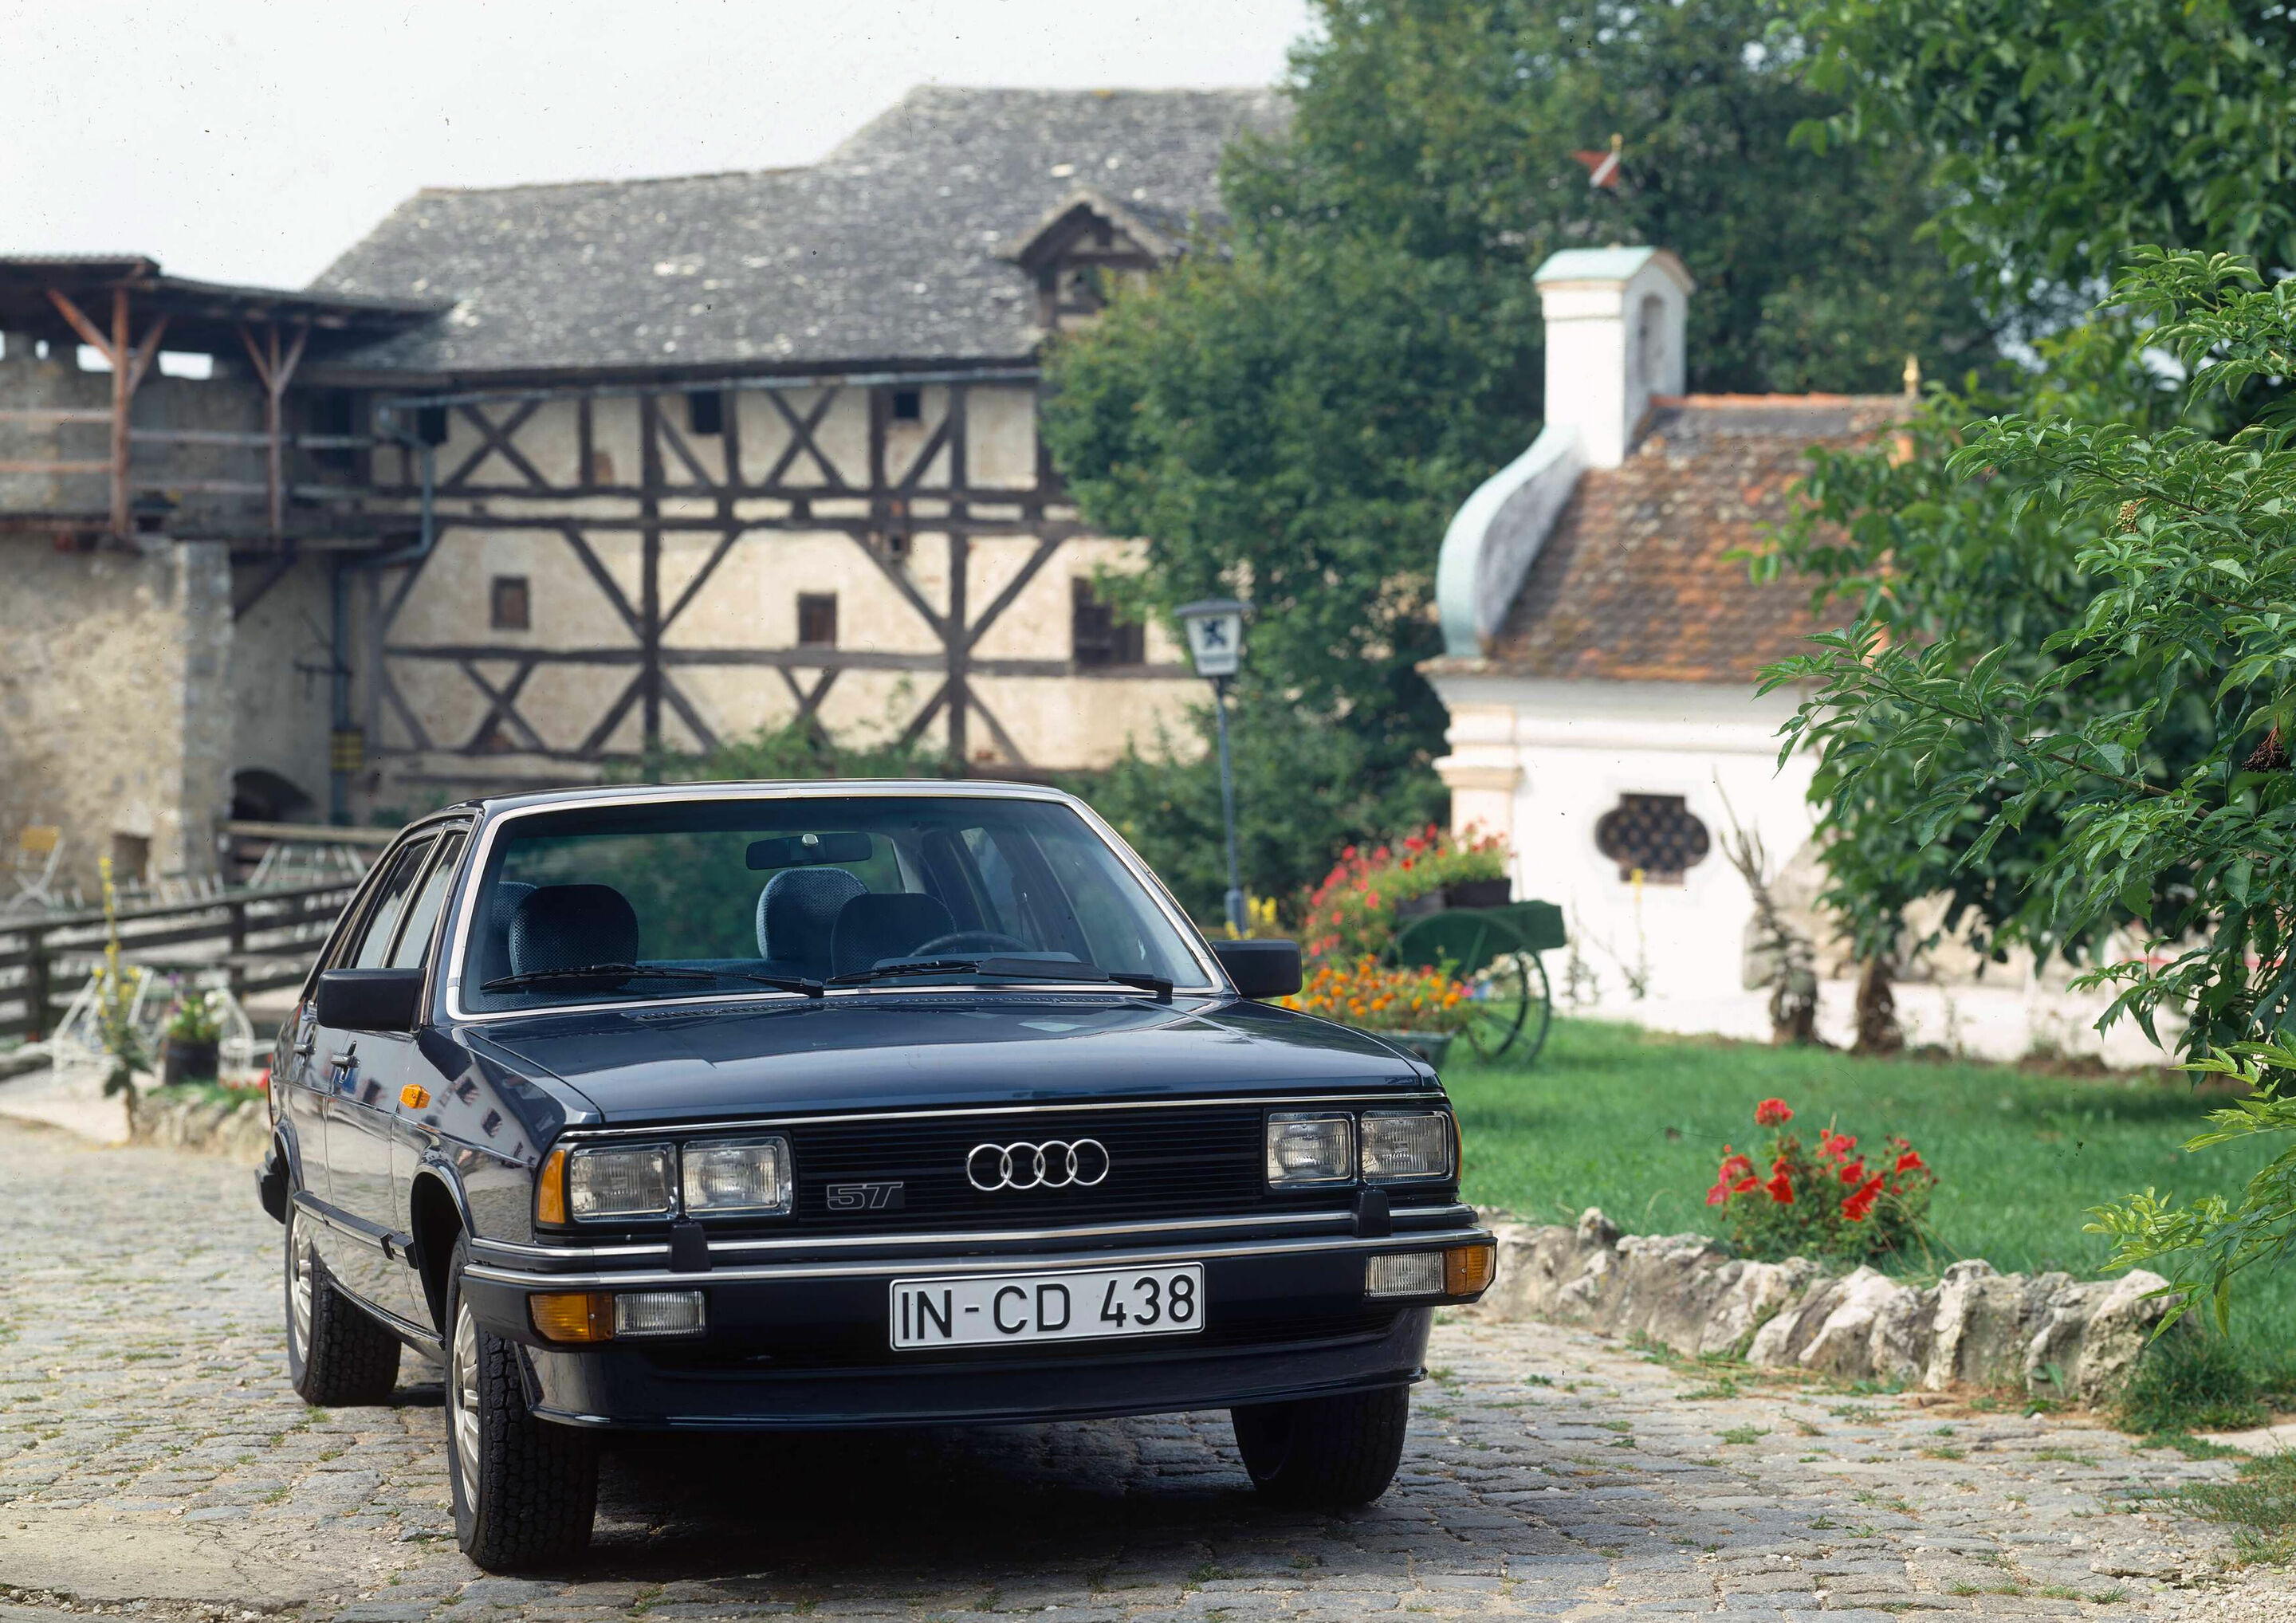 Audi 200 5T (C2), model year 1981